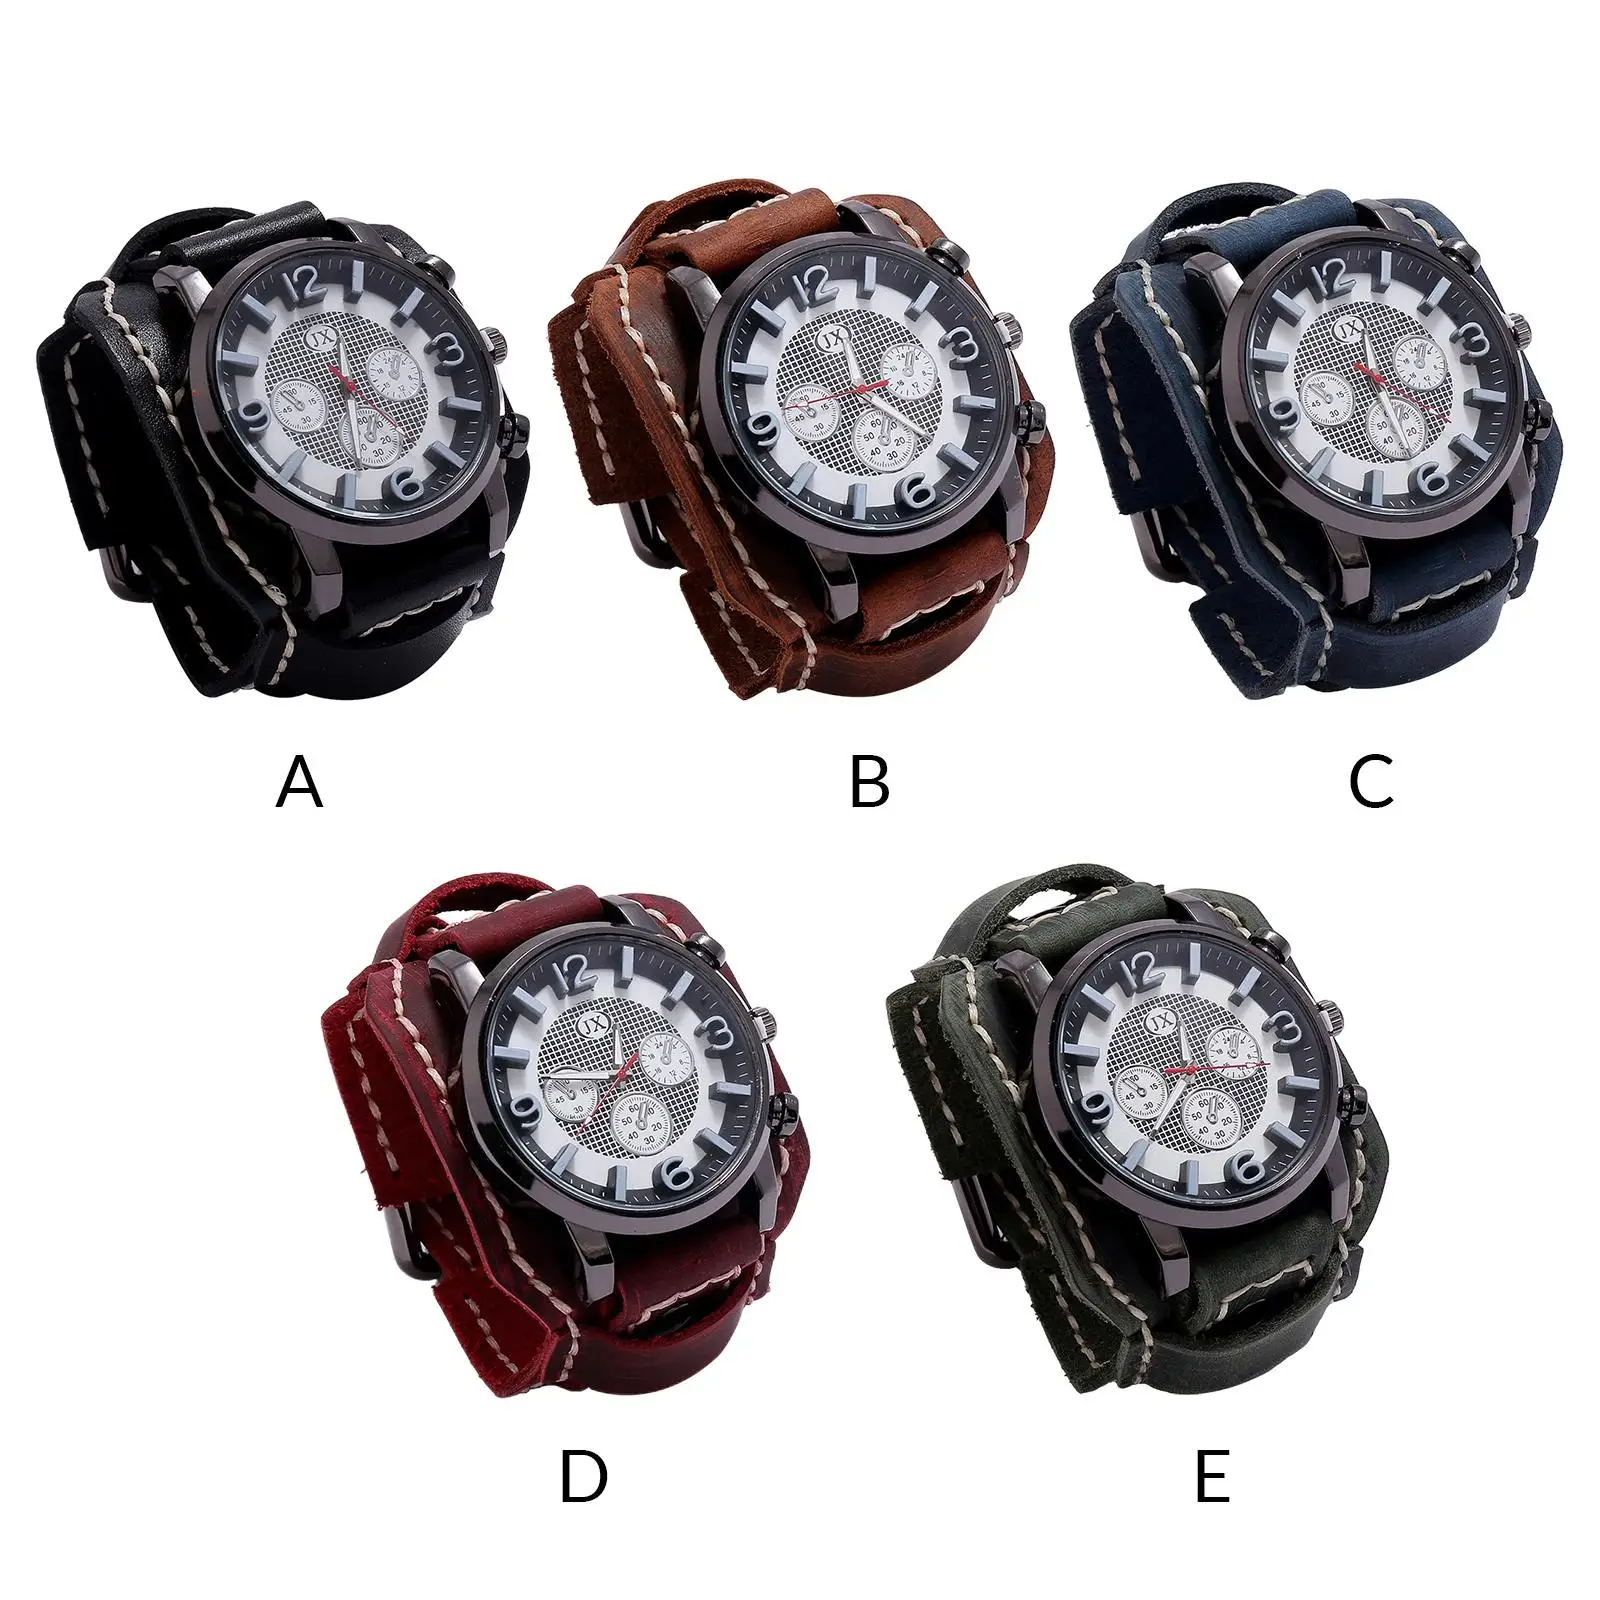 

Punk Retro Watch Bracelet Cuff Hybrid Comfortable Round Dial Watch Band Fashion Leather Belt Analog Quartz Wrist Watches Women